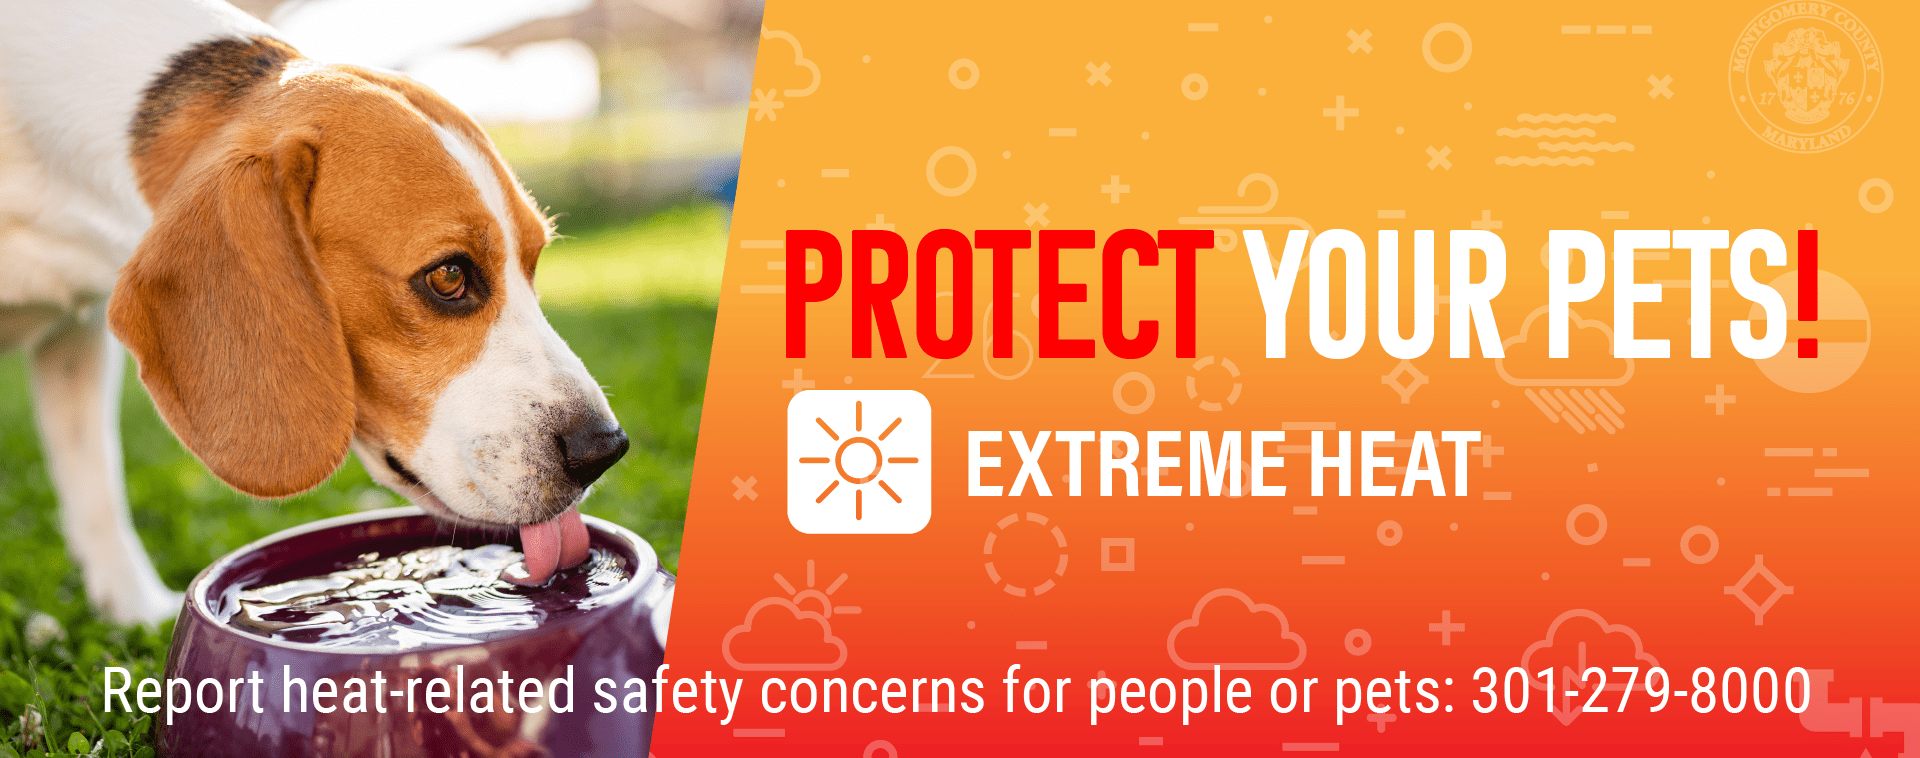 Heat Emergency Pet Safety